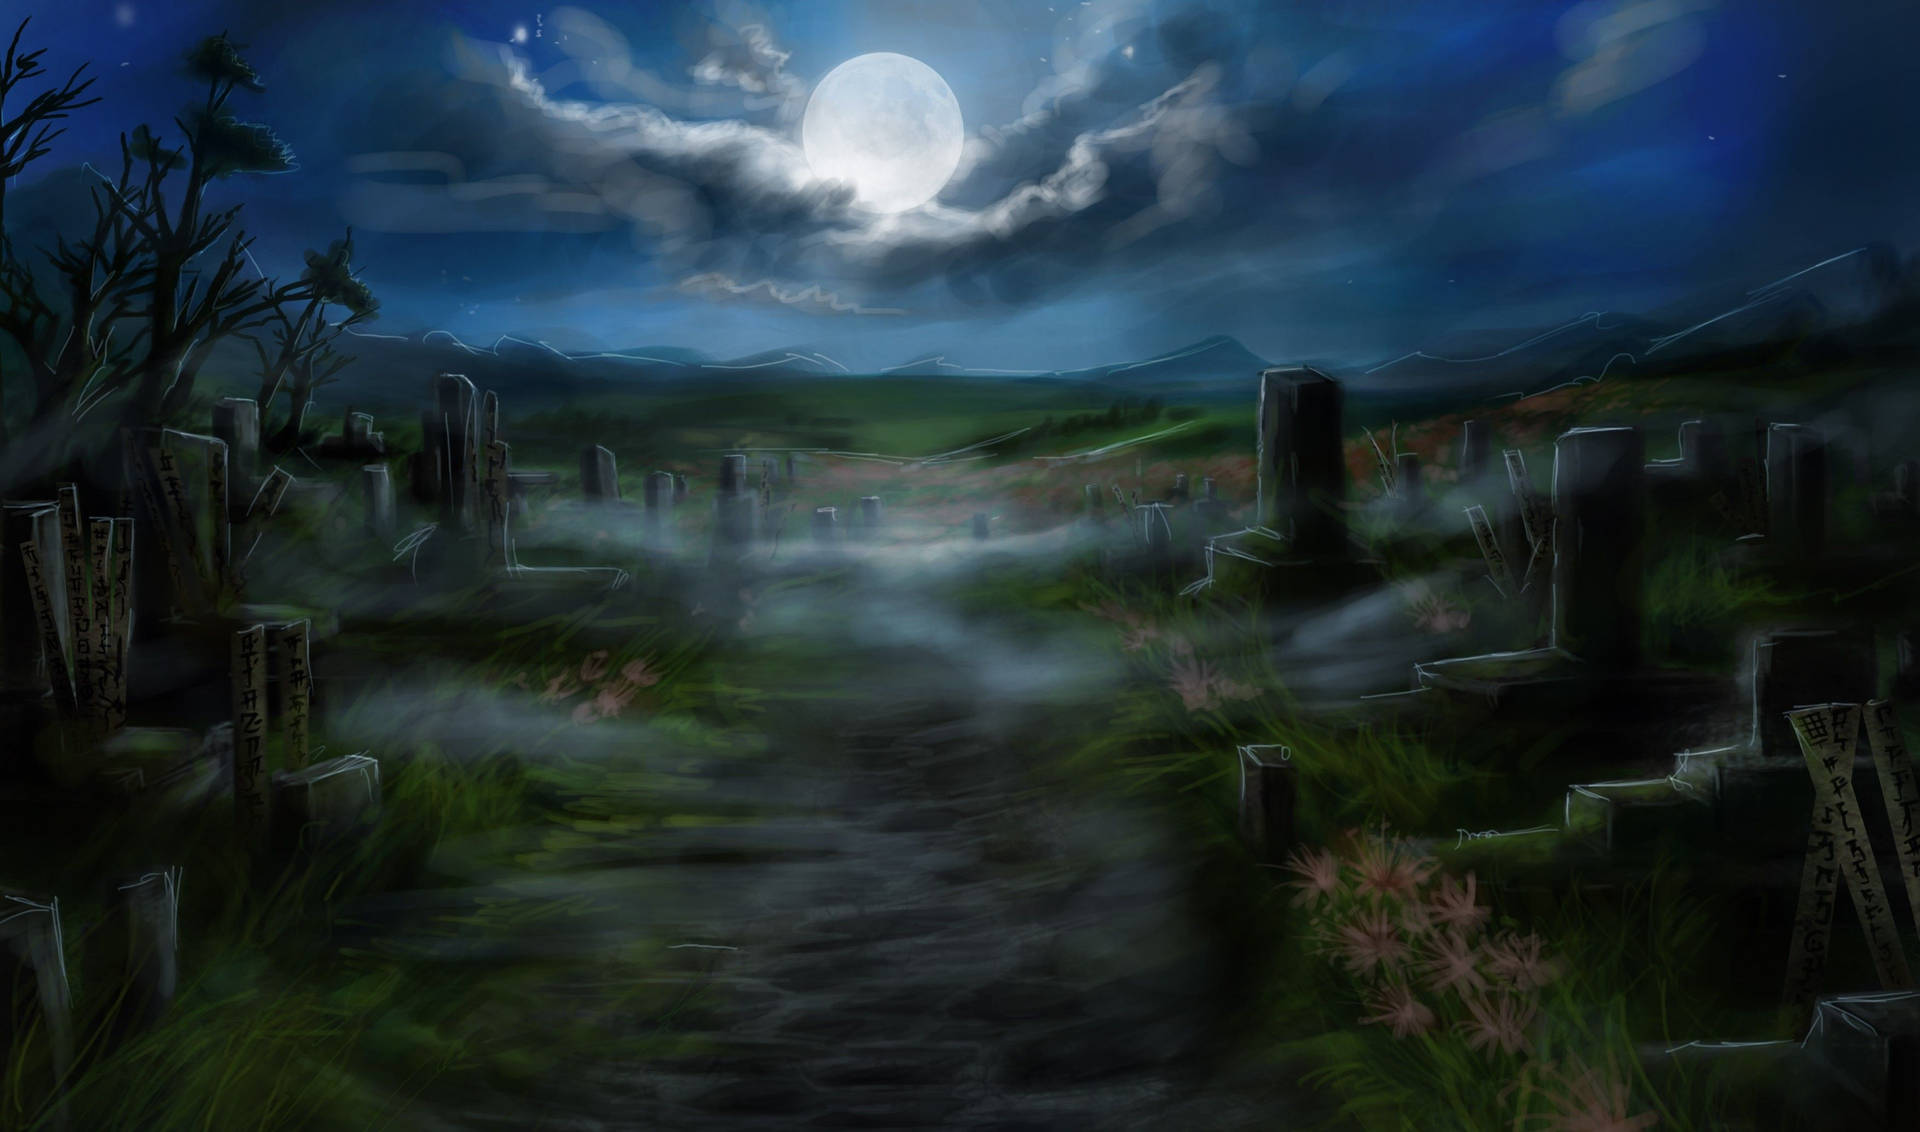 Dark Halloween Graveyard